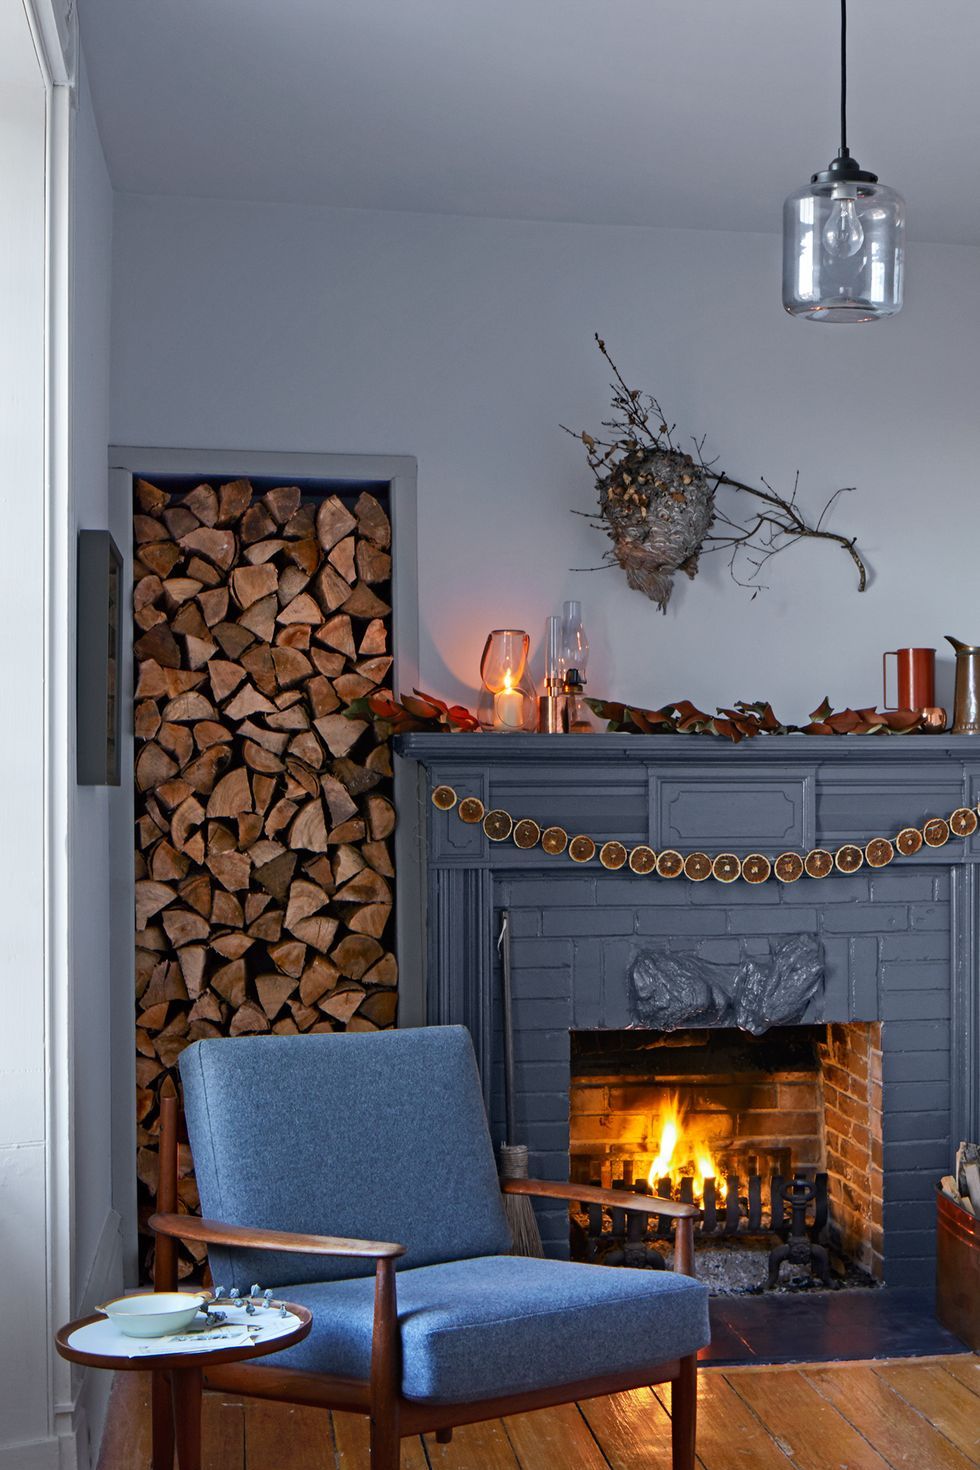 Fireplace Raised Hearth Ideas - Best 25 Fireplace hearth ideas on Pinterest